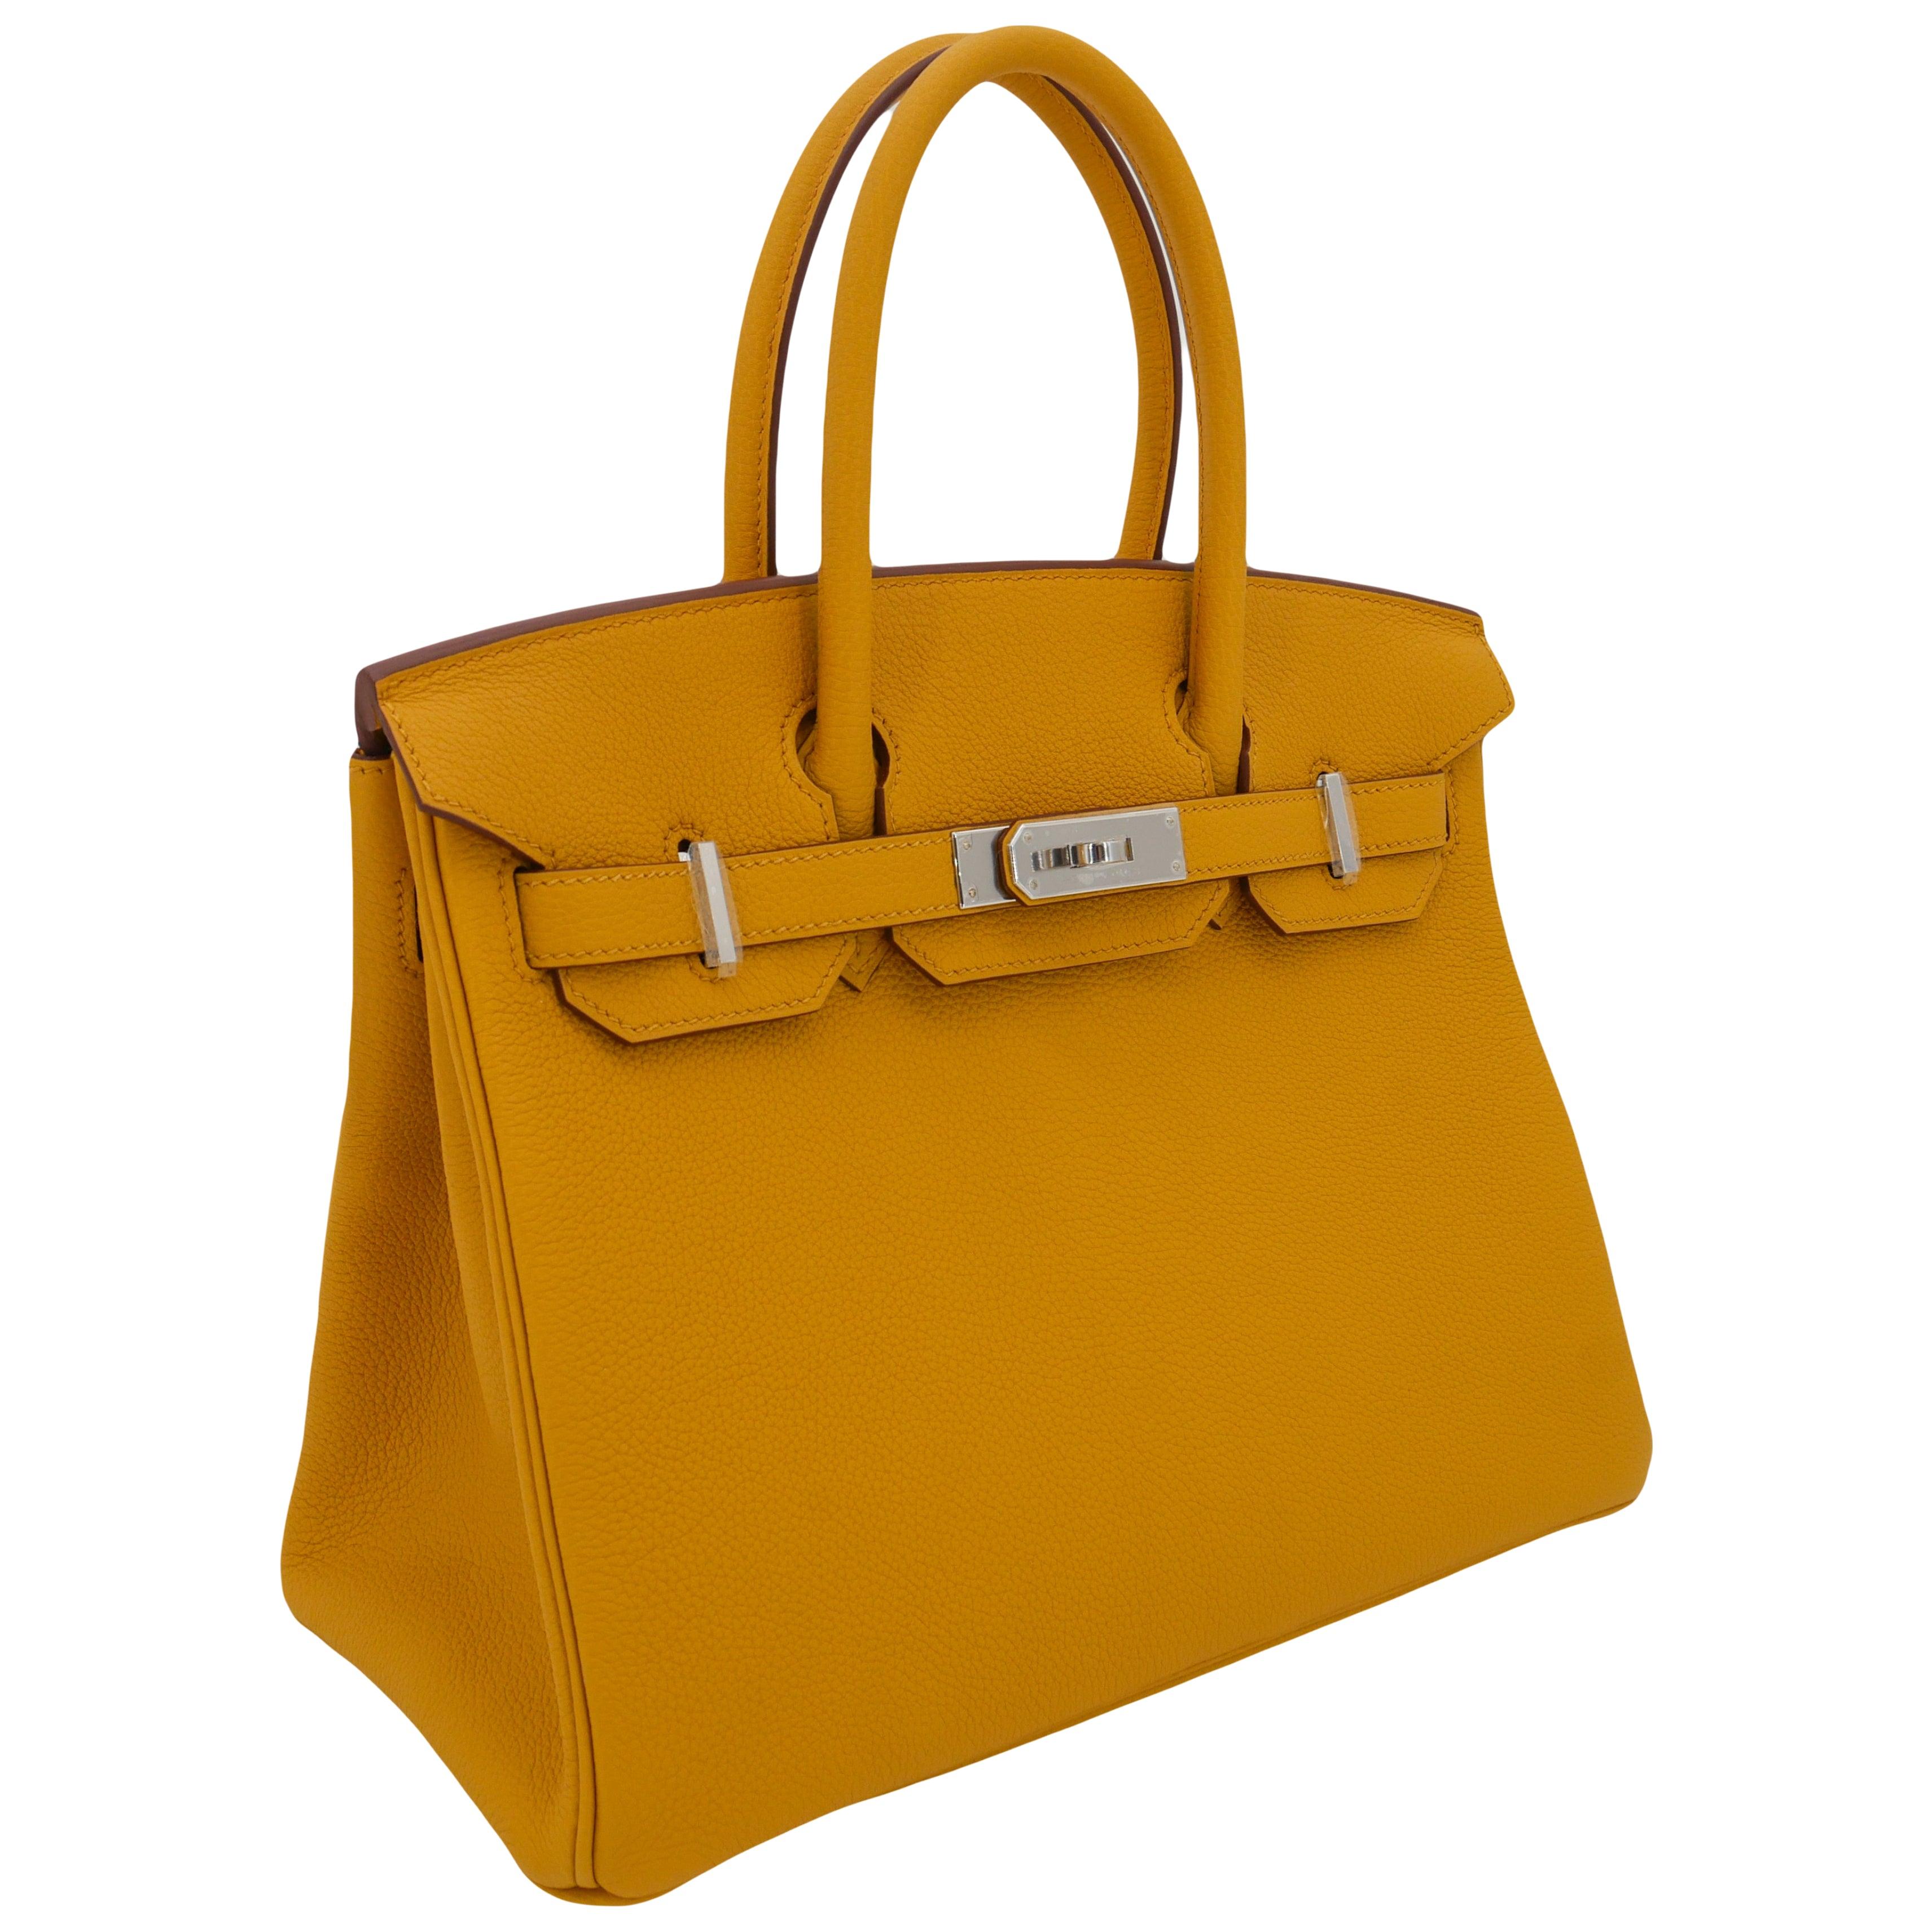 Brand: Hermès
Style: Birkin
Size: 30cm
Color: Ambre
Material: Togo Leather
Hardware: Palladium Hardware (PHW)
Dimensions: 11.75